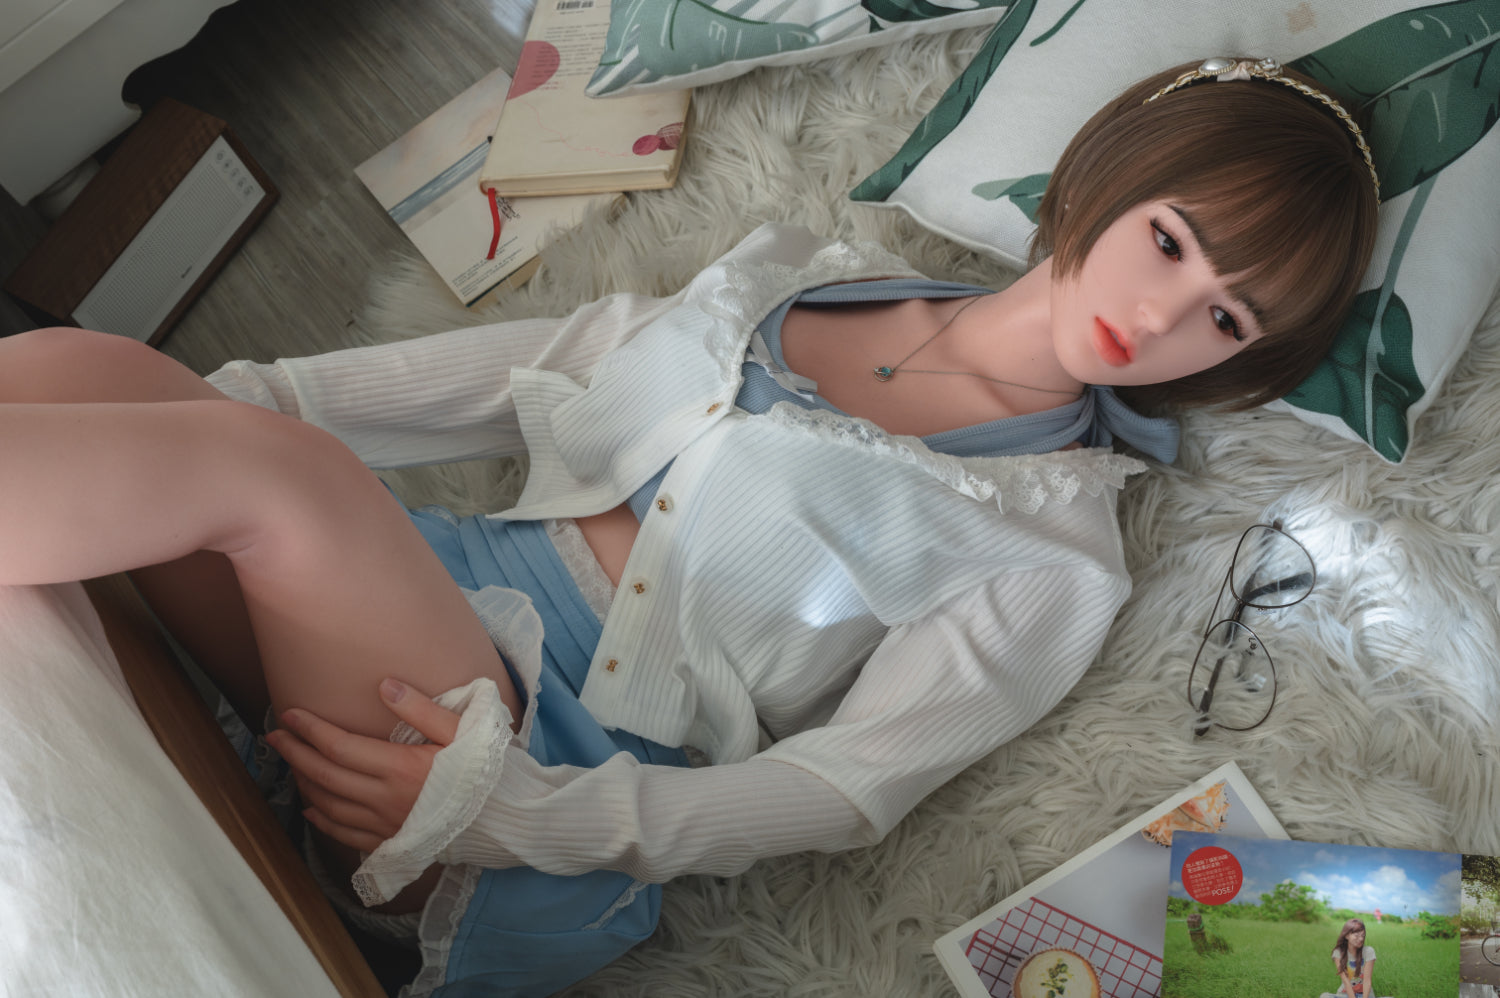 TAYU Doll 148 cm D Silicone - QingZhi - V1 | Sex Dolls SG